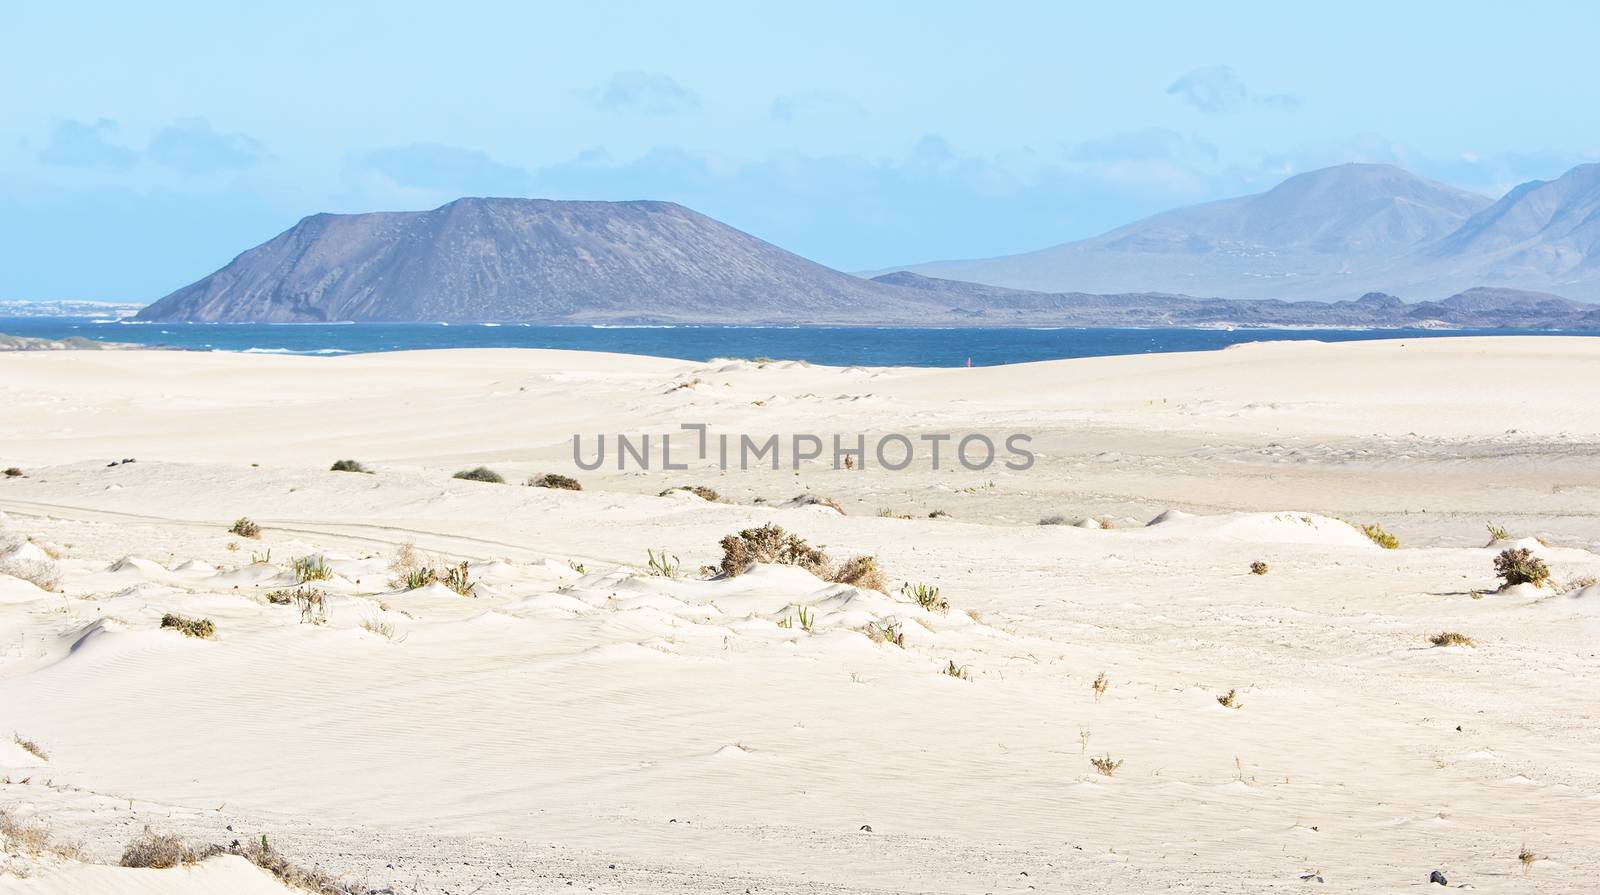 Dunes, Sand, Sea and Volcano in Fuerteventura by Brigida_Soriano